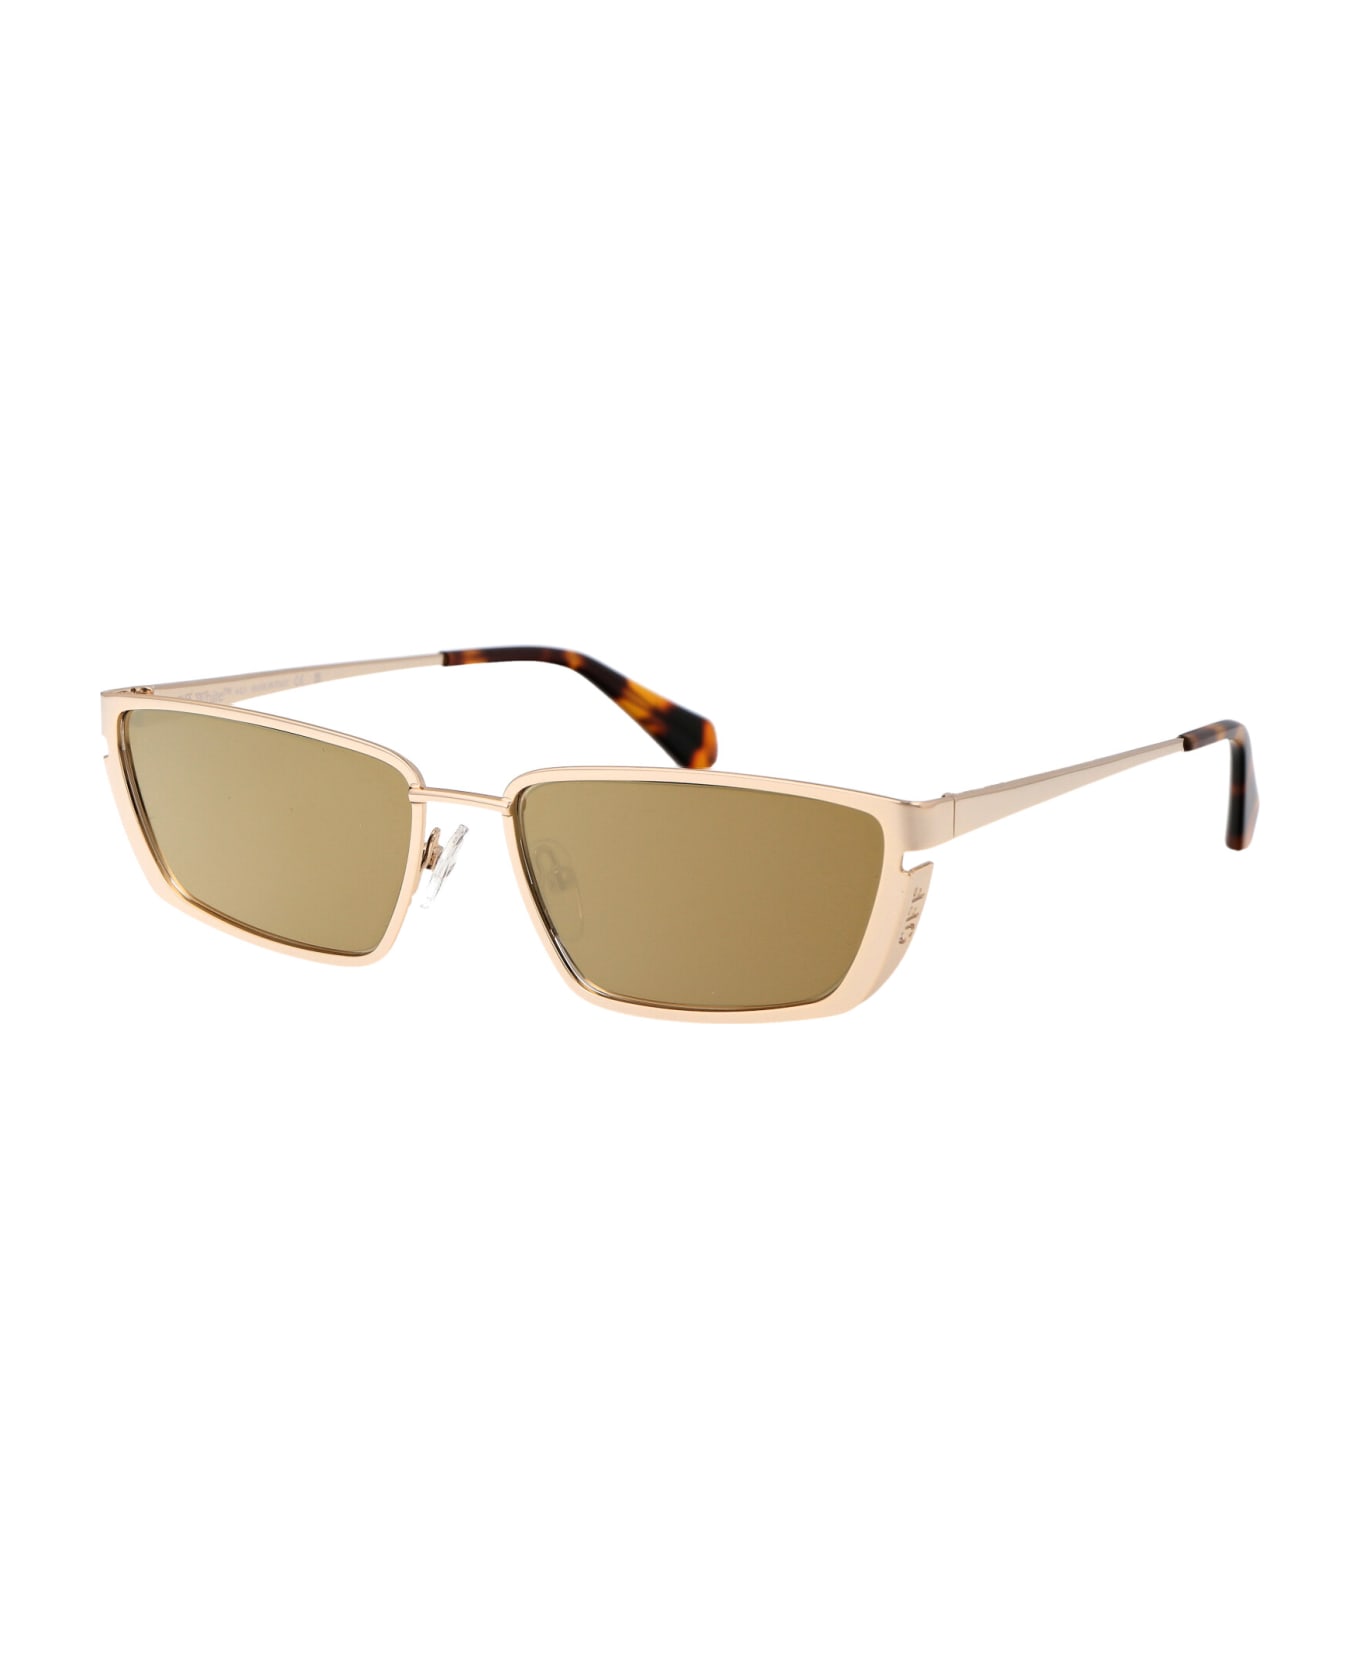 Off-White Richfield Sunglasses - 7676 GOLD GOLD  サングラス